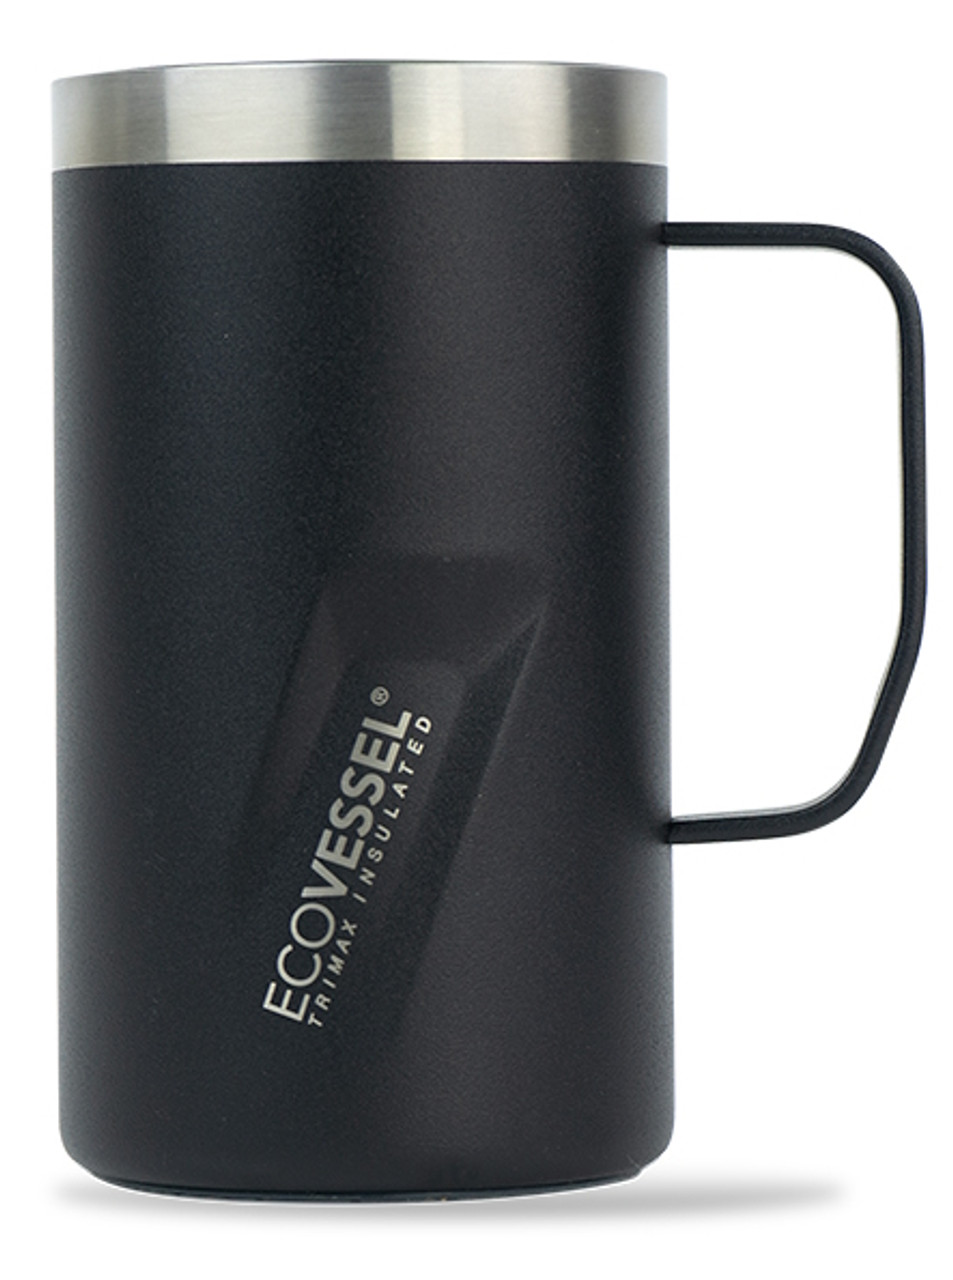 16 oz EcoVessel Insulated Coffee mug, The Transit